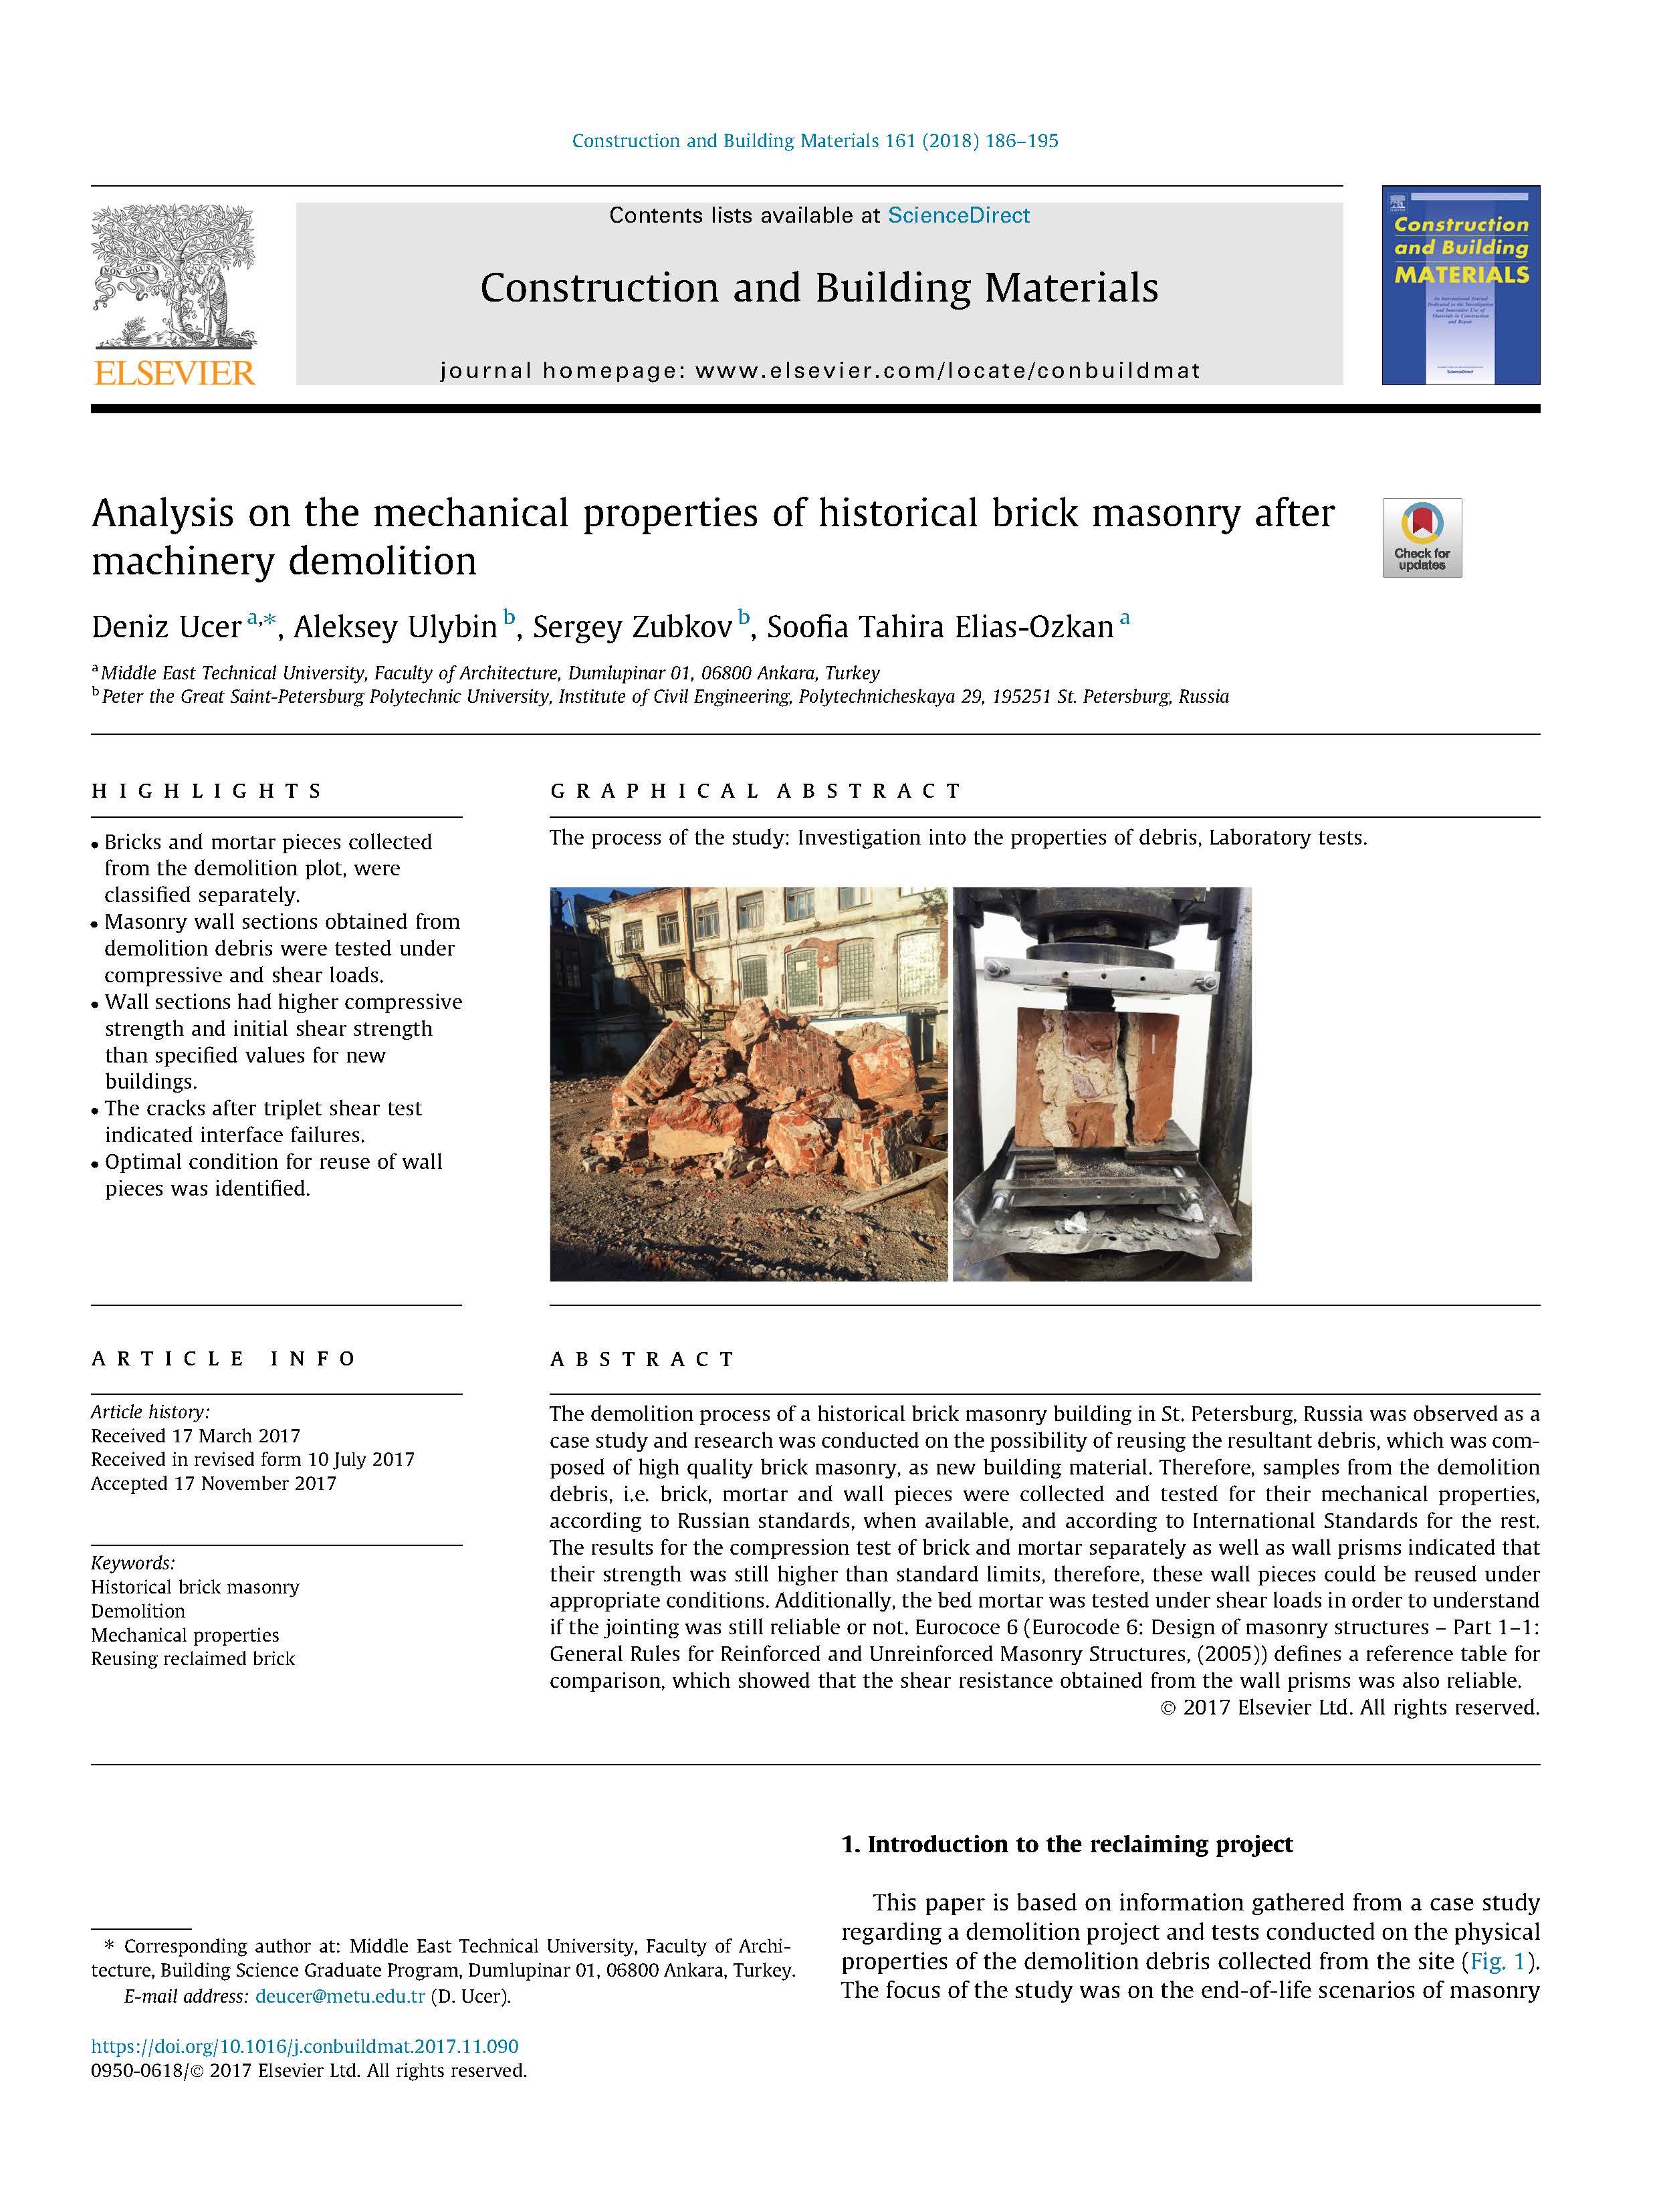 Analysis on the mechanical properties of historical brick masonry after machinery demolition